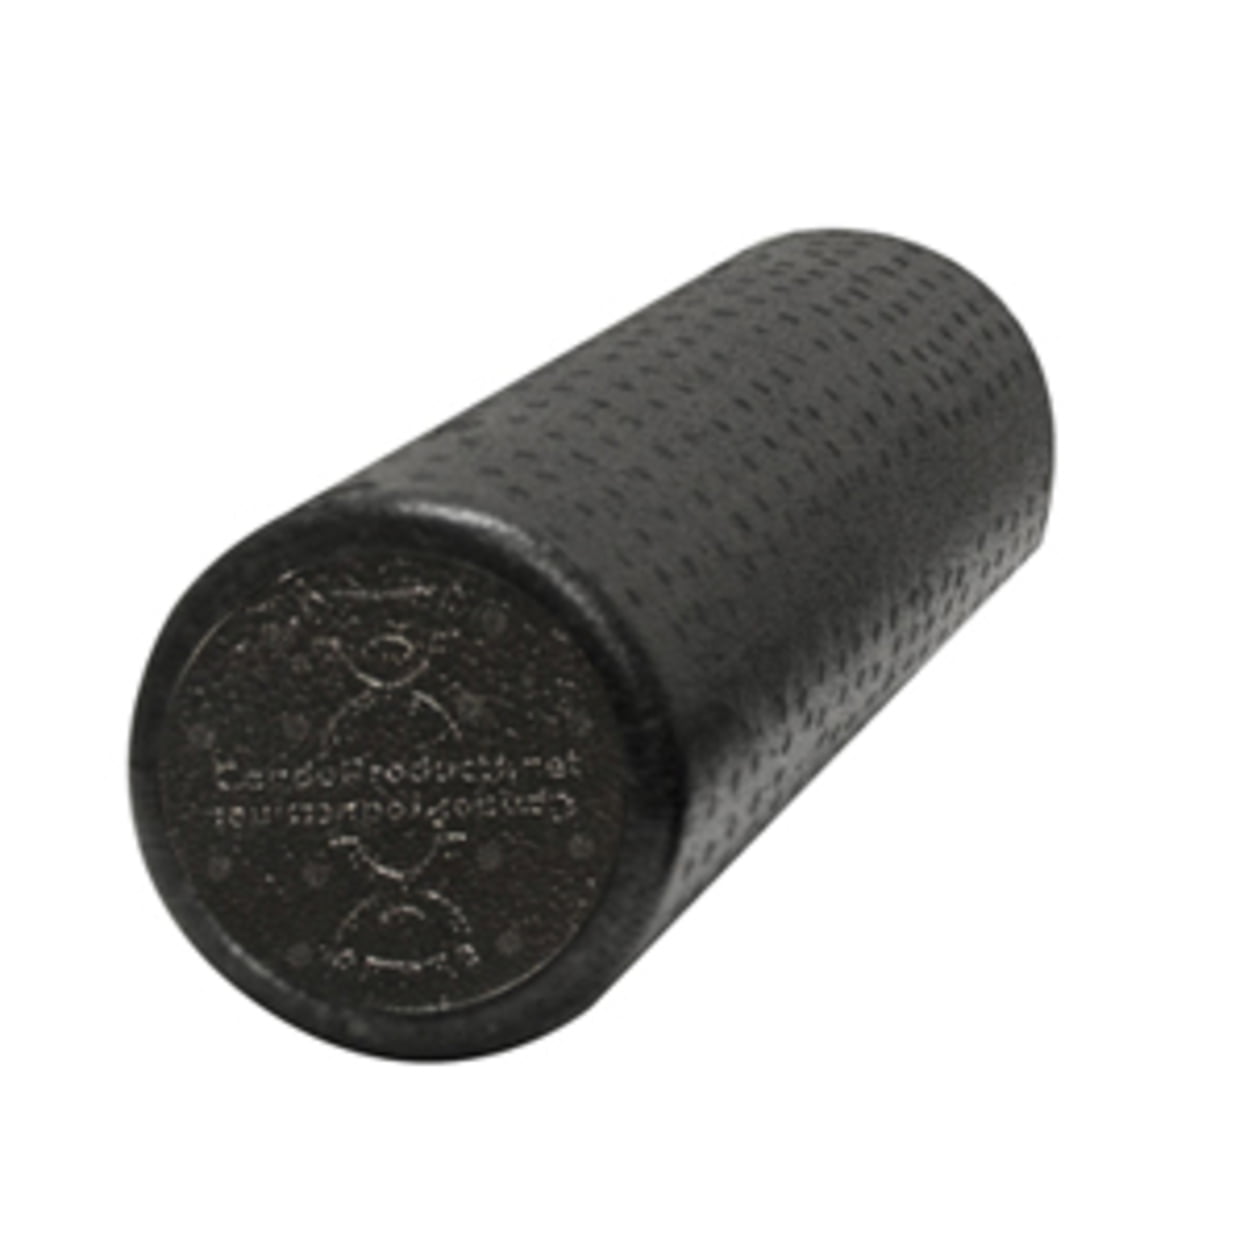 CanDo Foam Roller - Black Composite - Extra Firm - 6 x 36 - Half-Round 